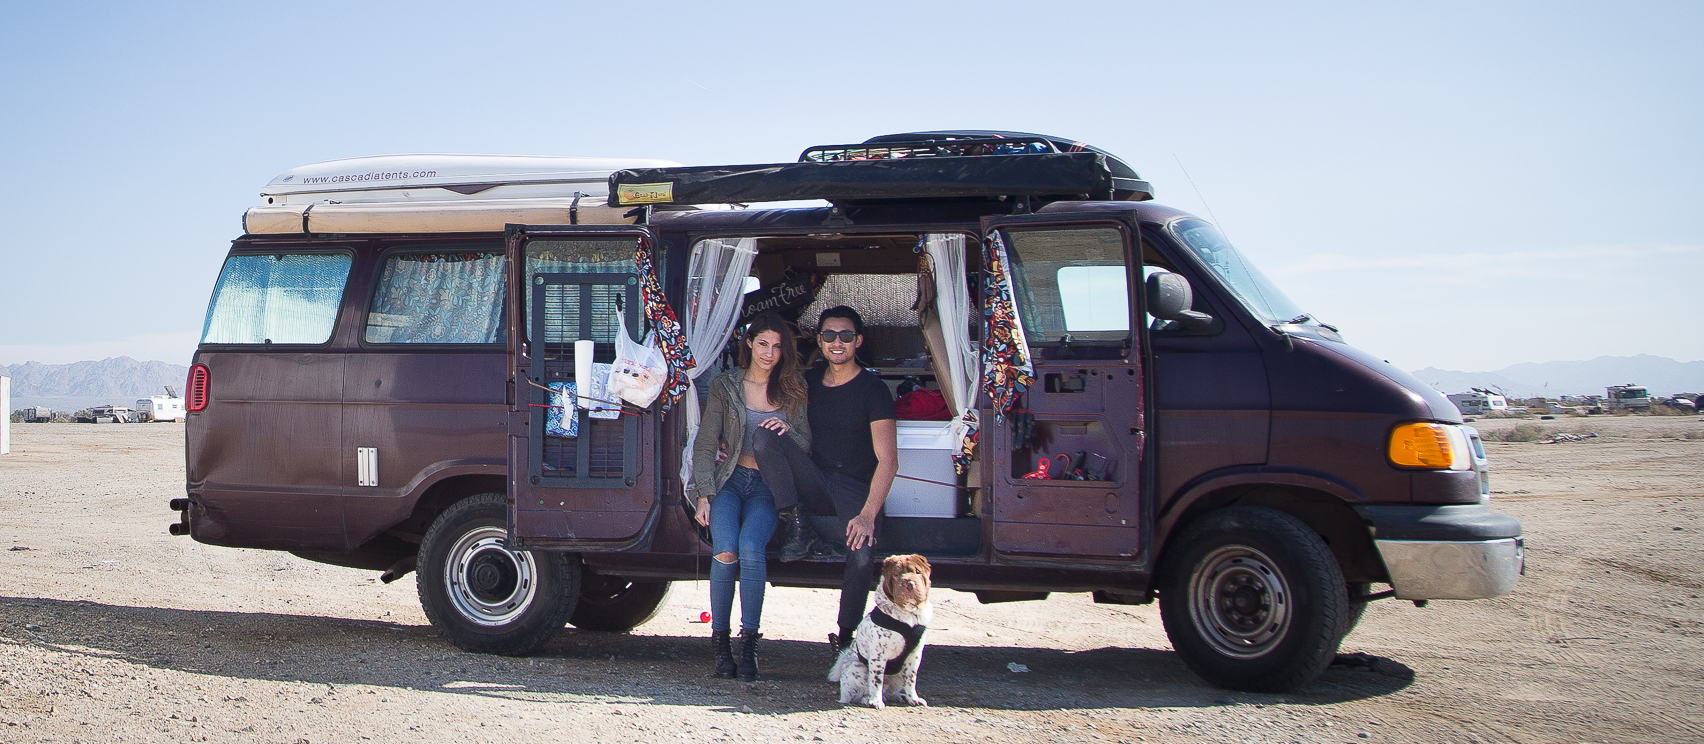  campervan to Coachella